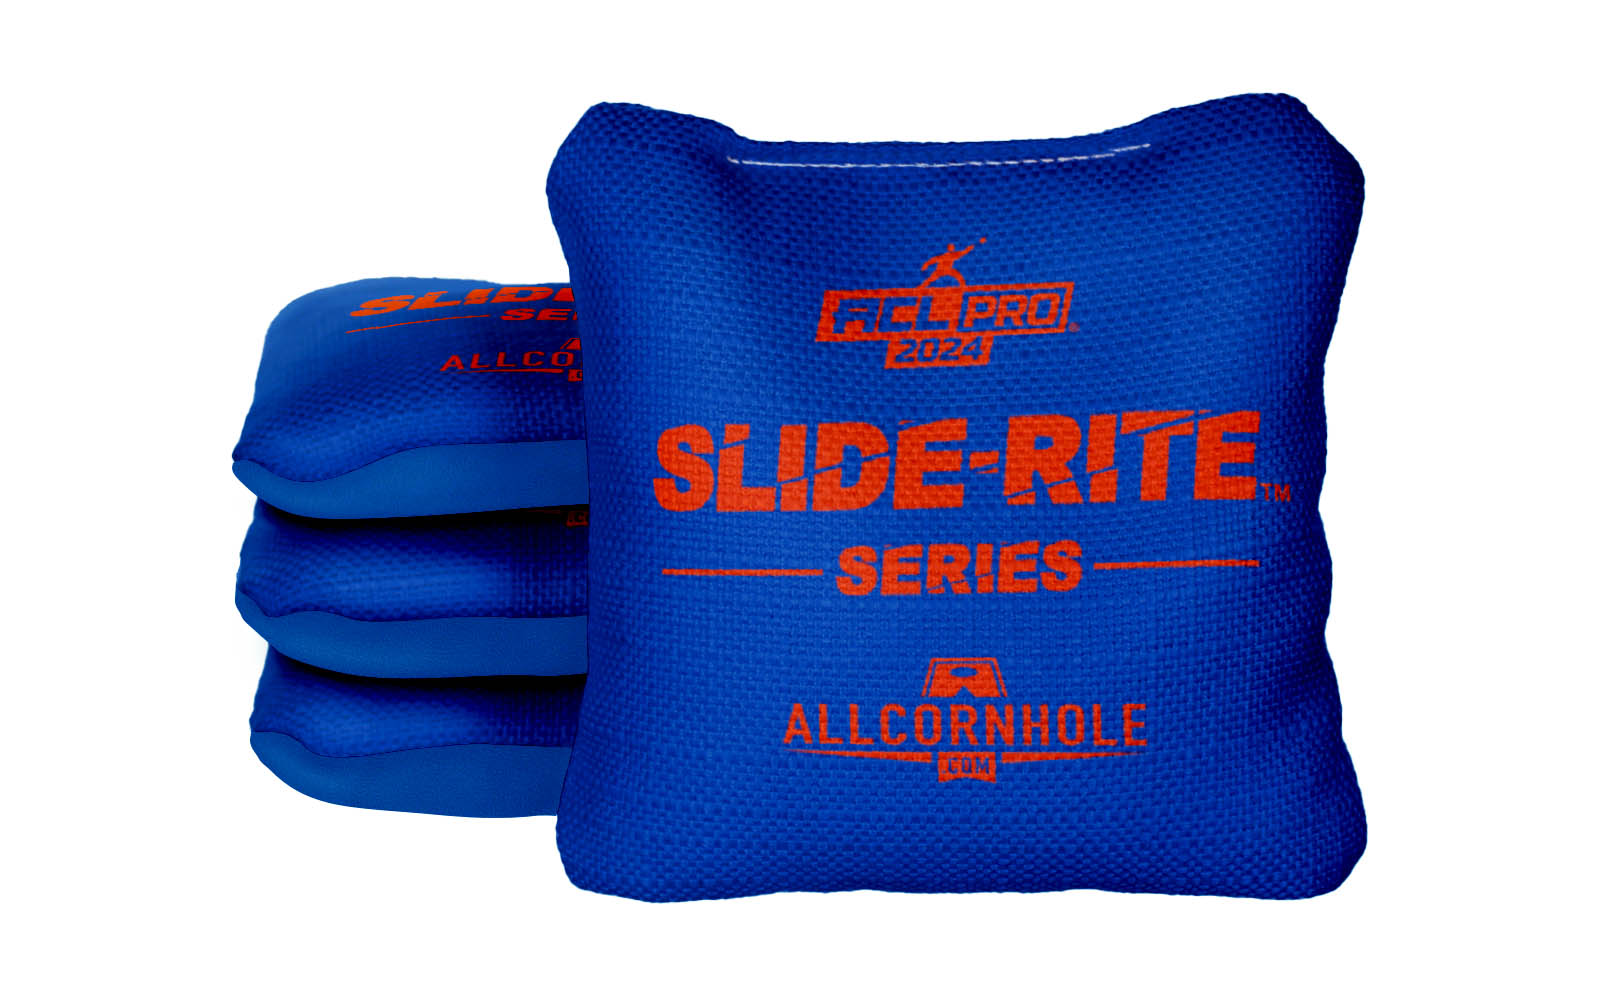 Officially Licensed Collegiate Cornhole Bags - Slide Rite - Set of 4 - University of Florida